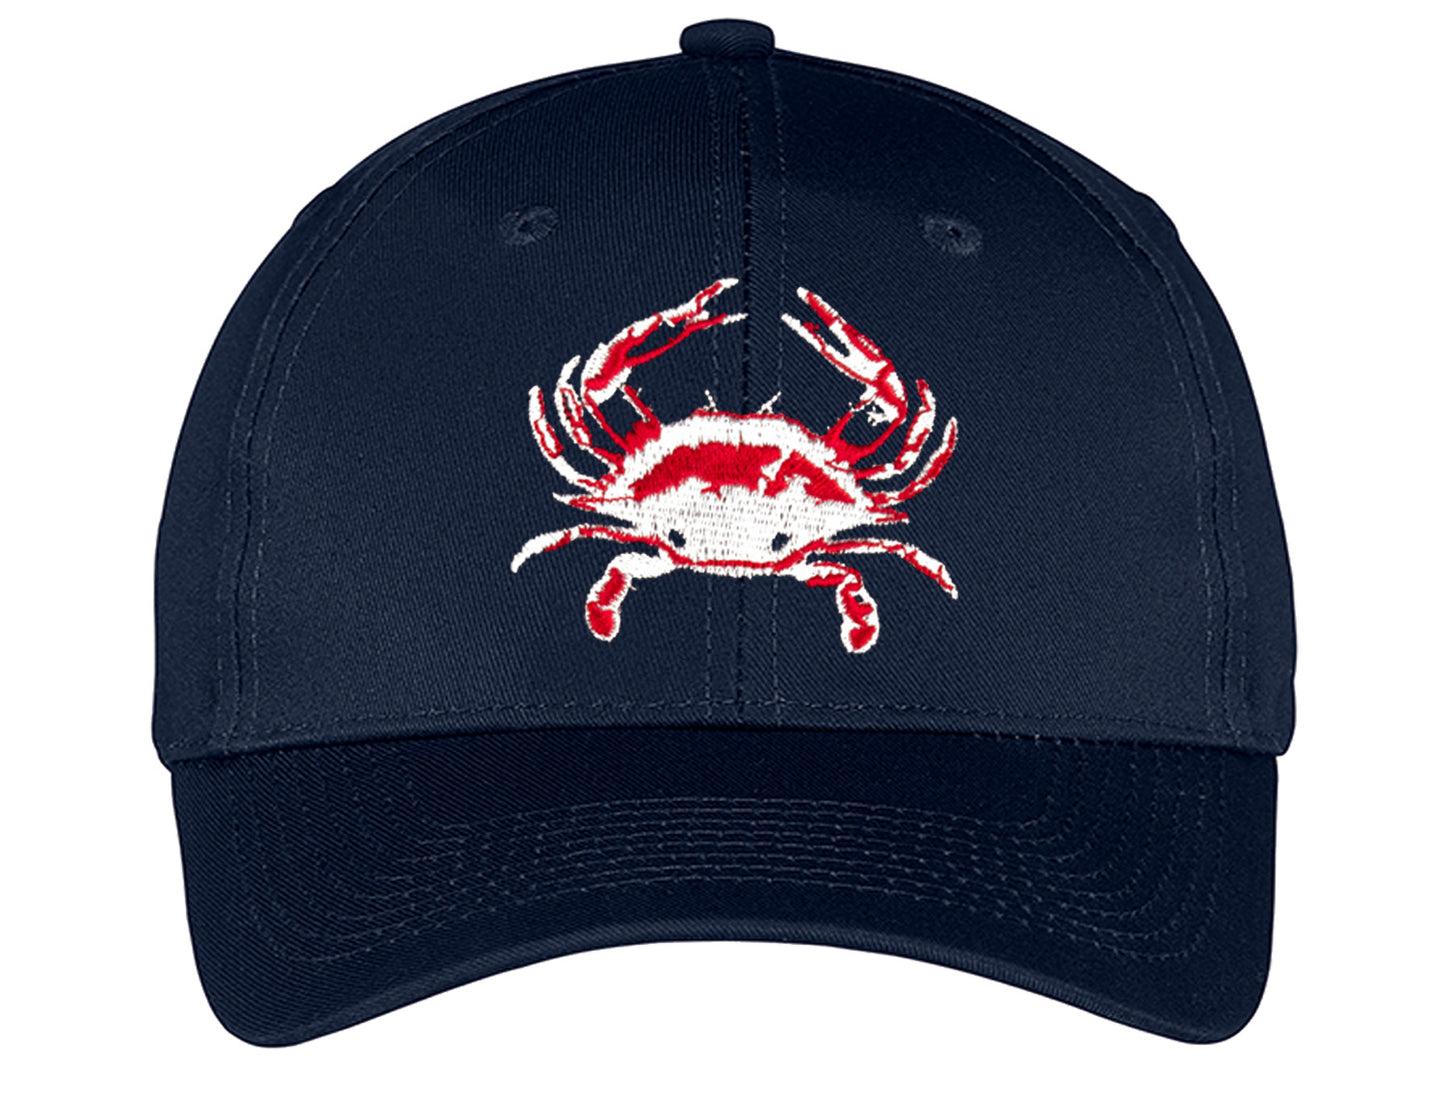 Blue Crab "Reel Crabby" Hat - Navy Unstructured Dad Hat